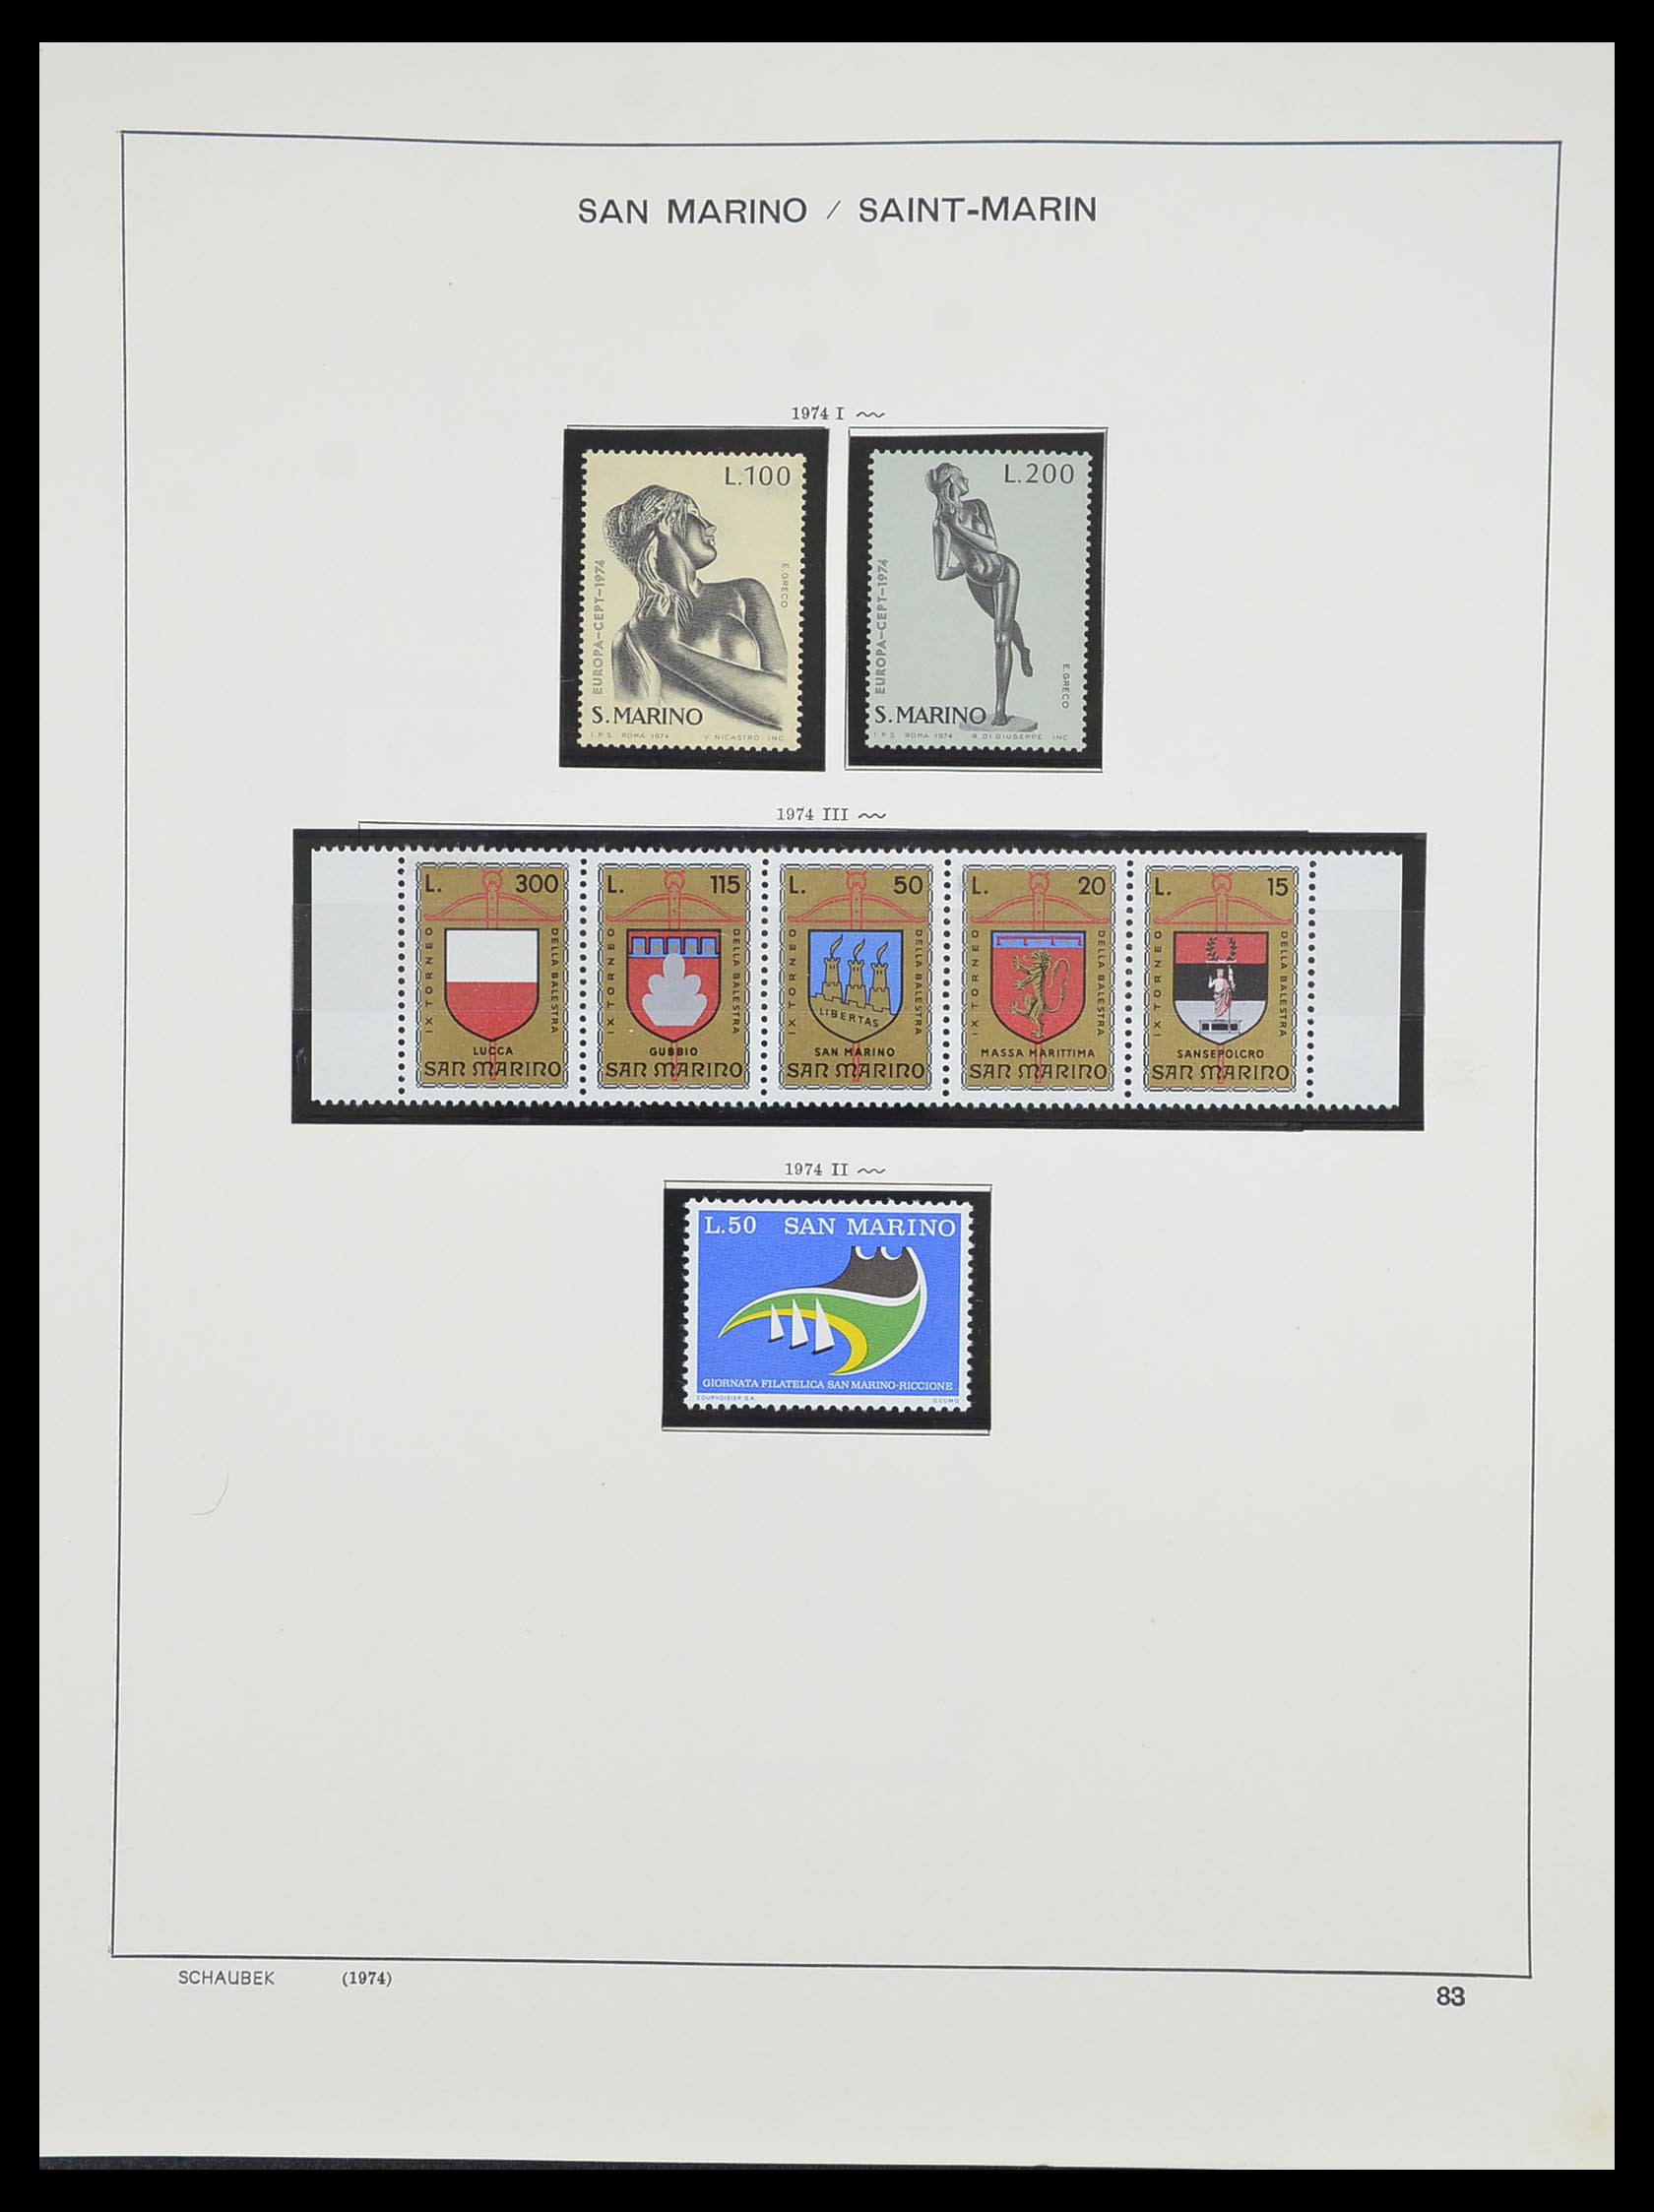 33937 093 - Stamp collection 33937 San Marino 1877-1983.